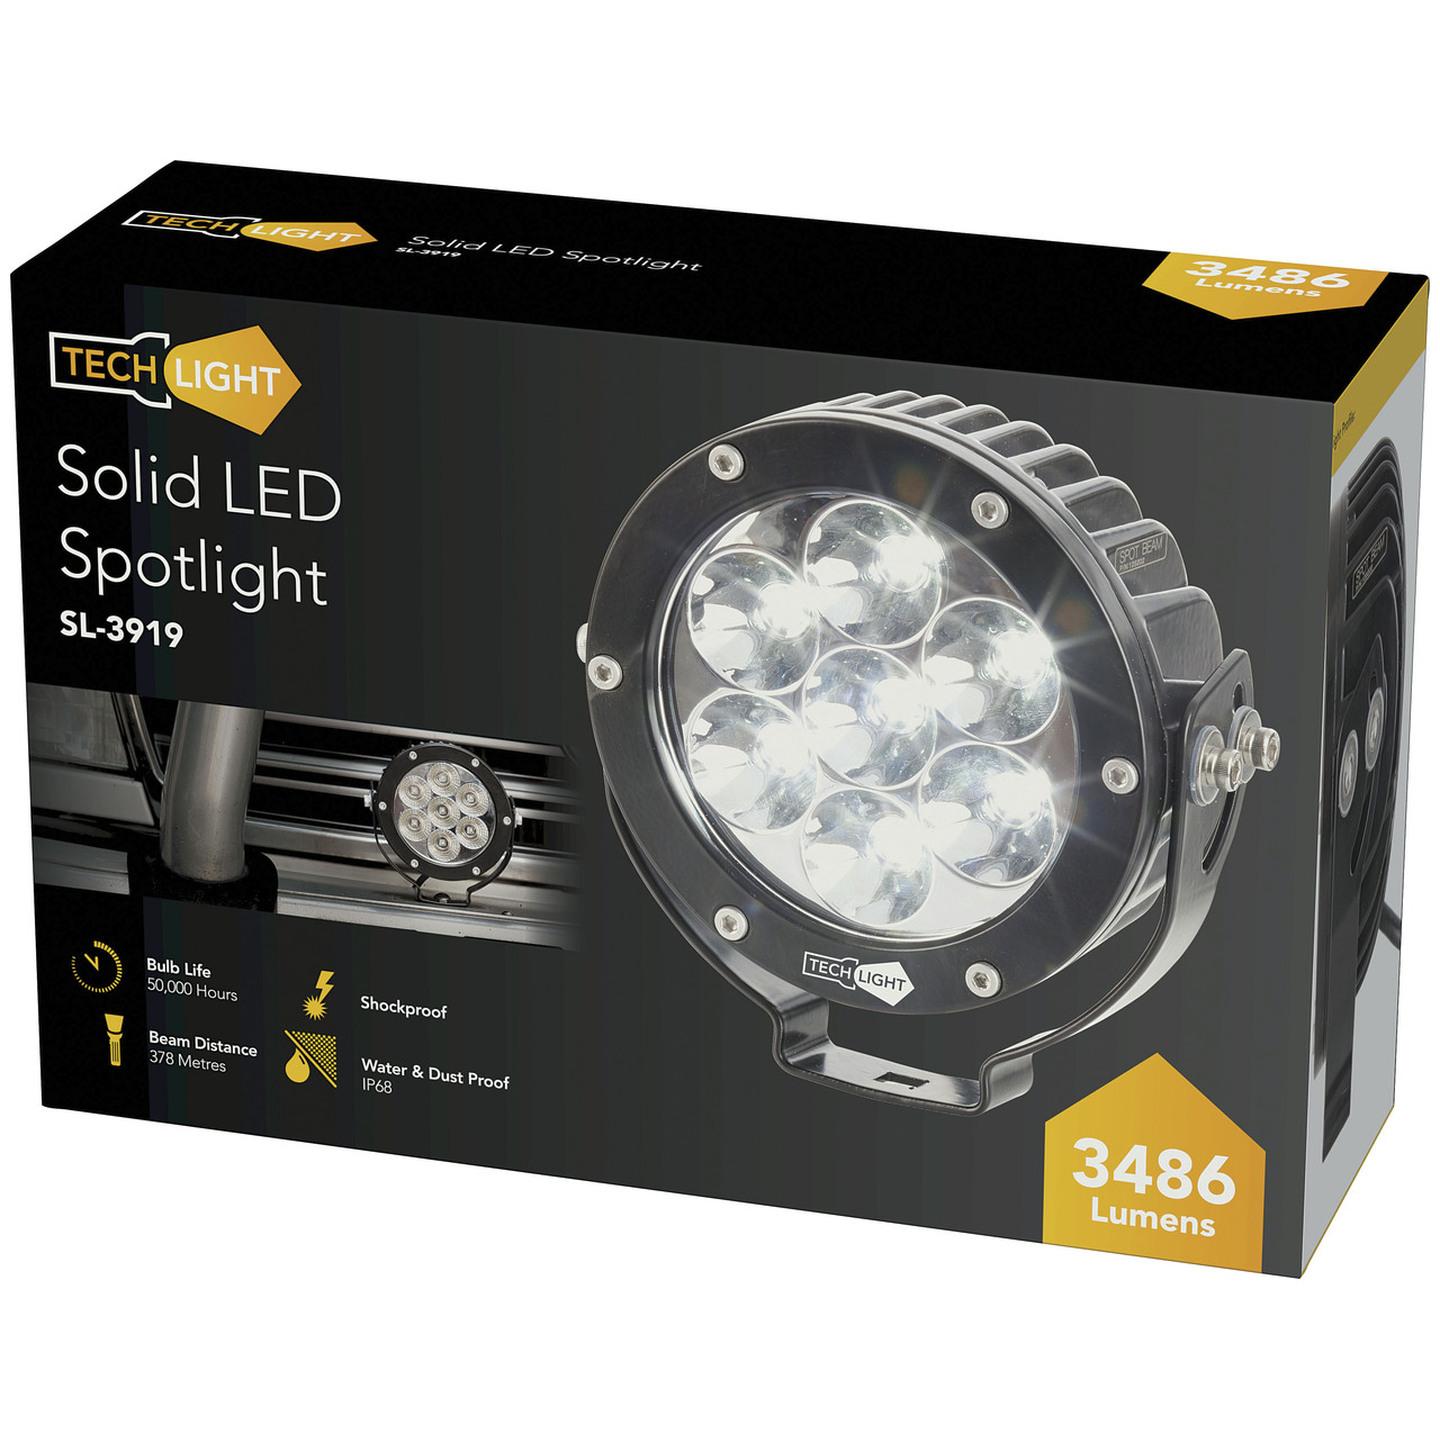 3486 Lumen IP68 Solid LED Spot Light